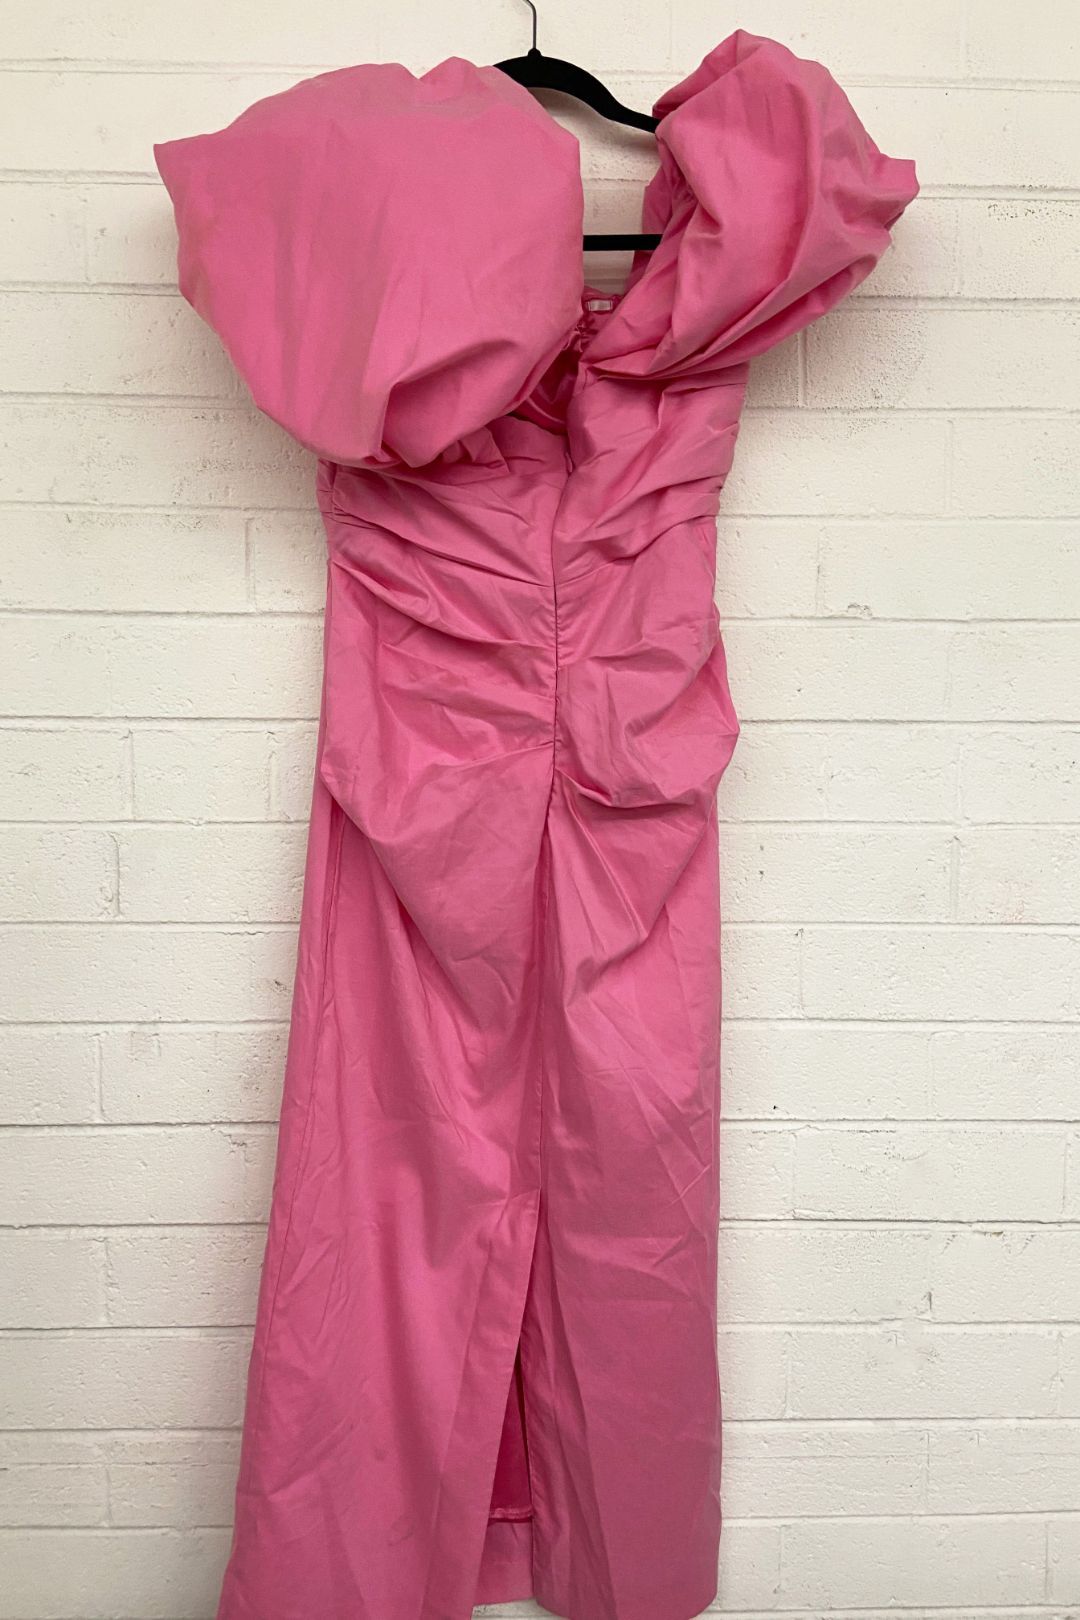 Sheike Strapless Off-Shoulder Dress in Hot Pink